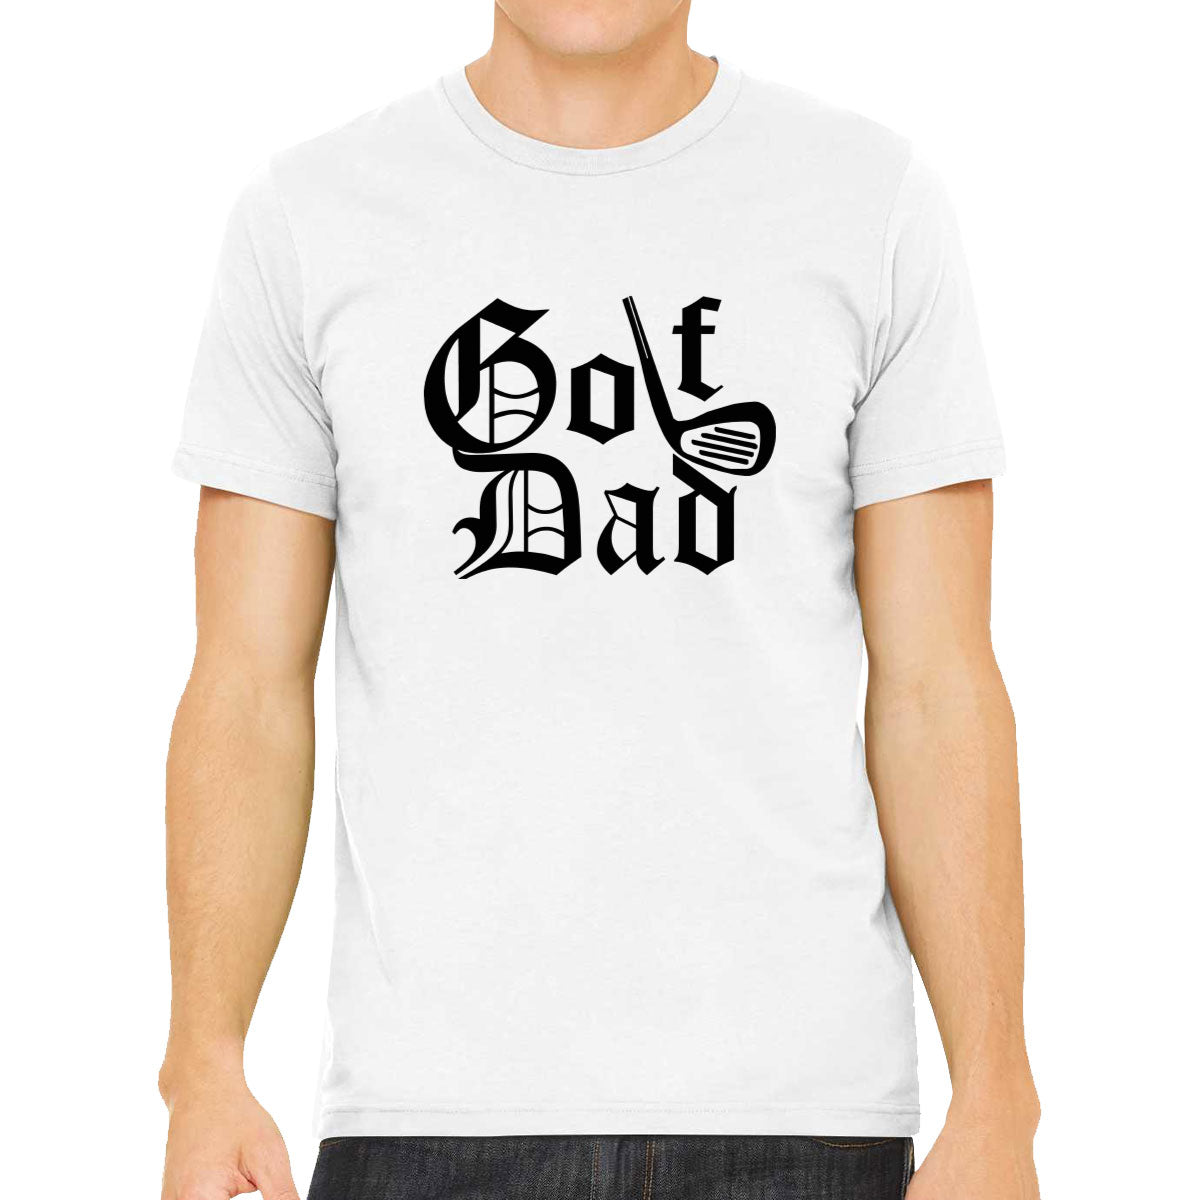 Golf Dad Men's T-shirt